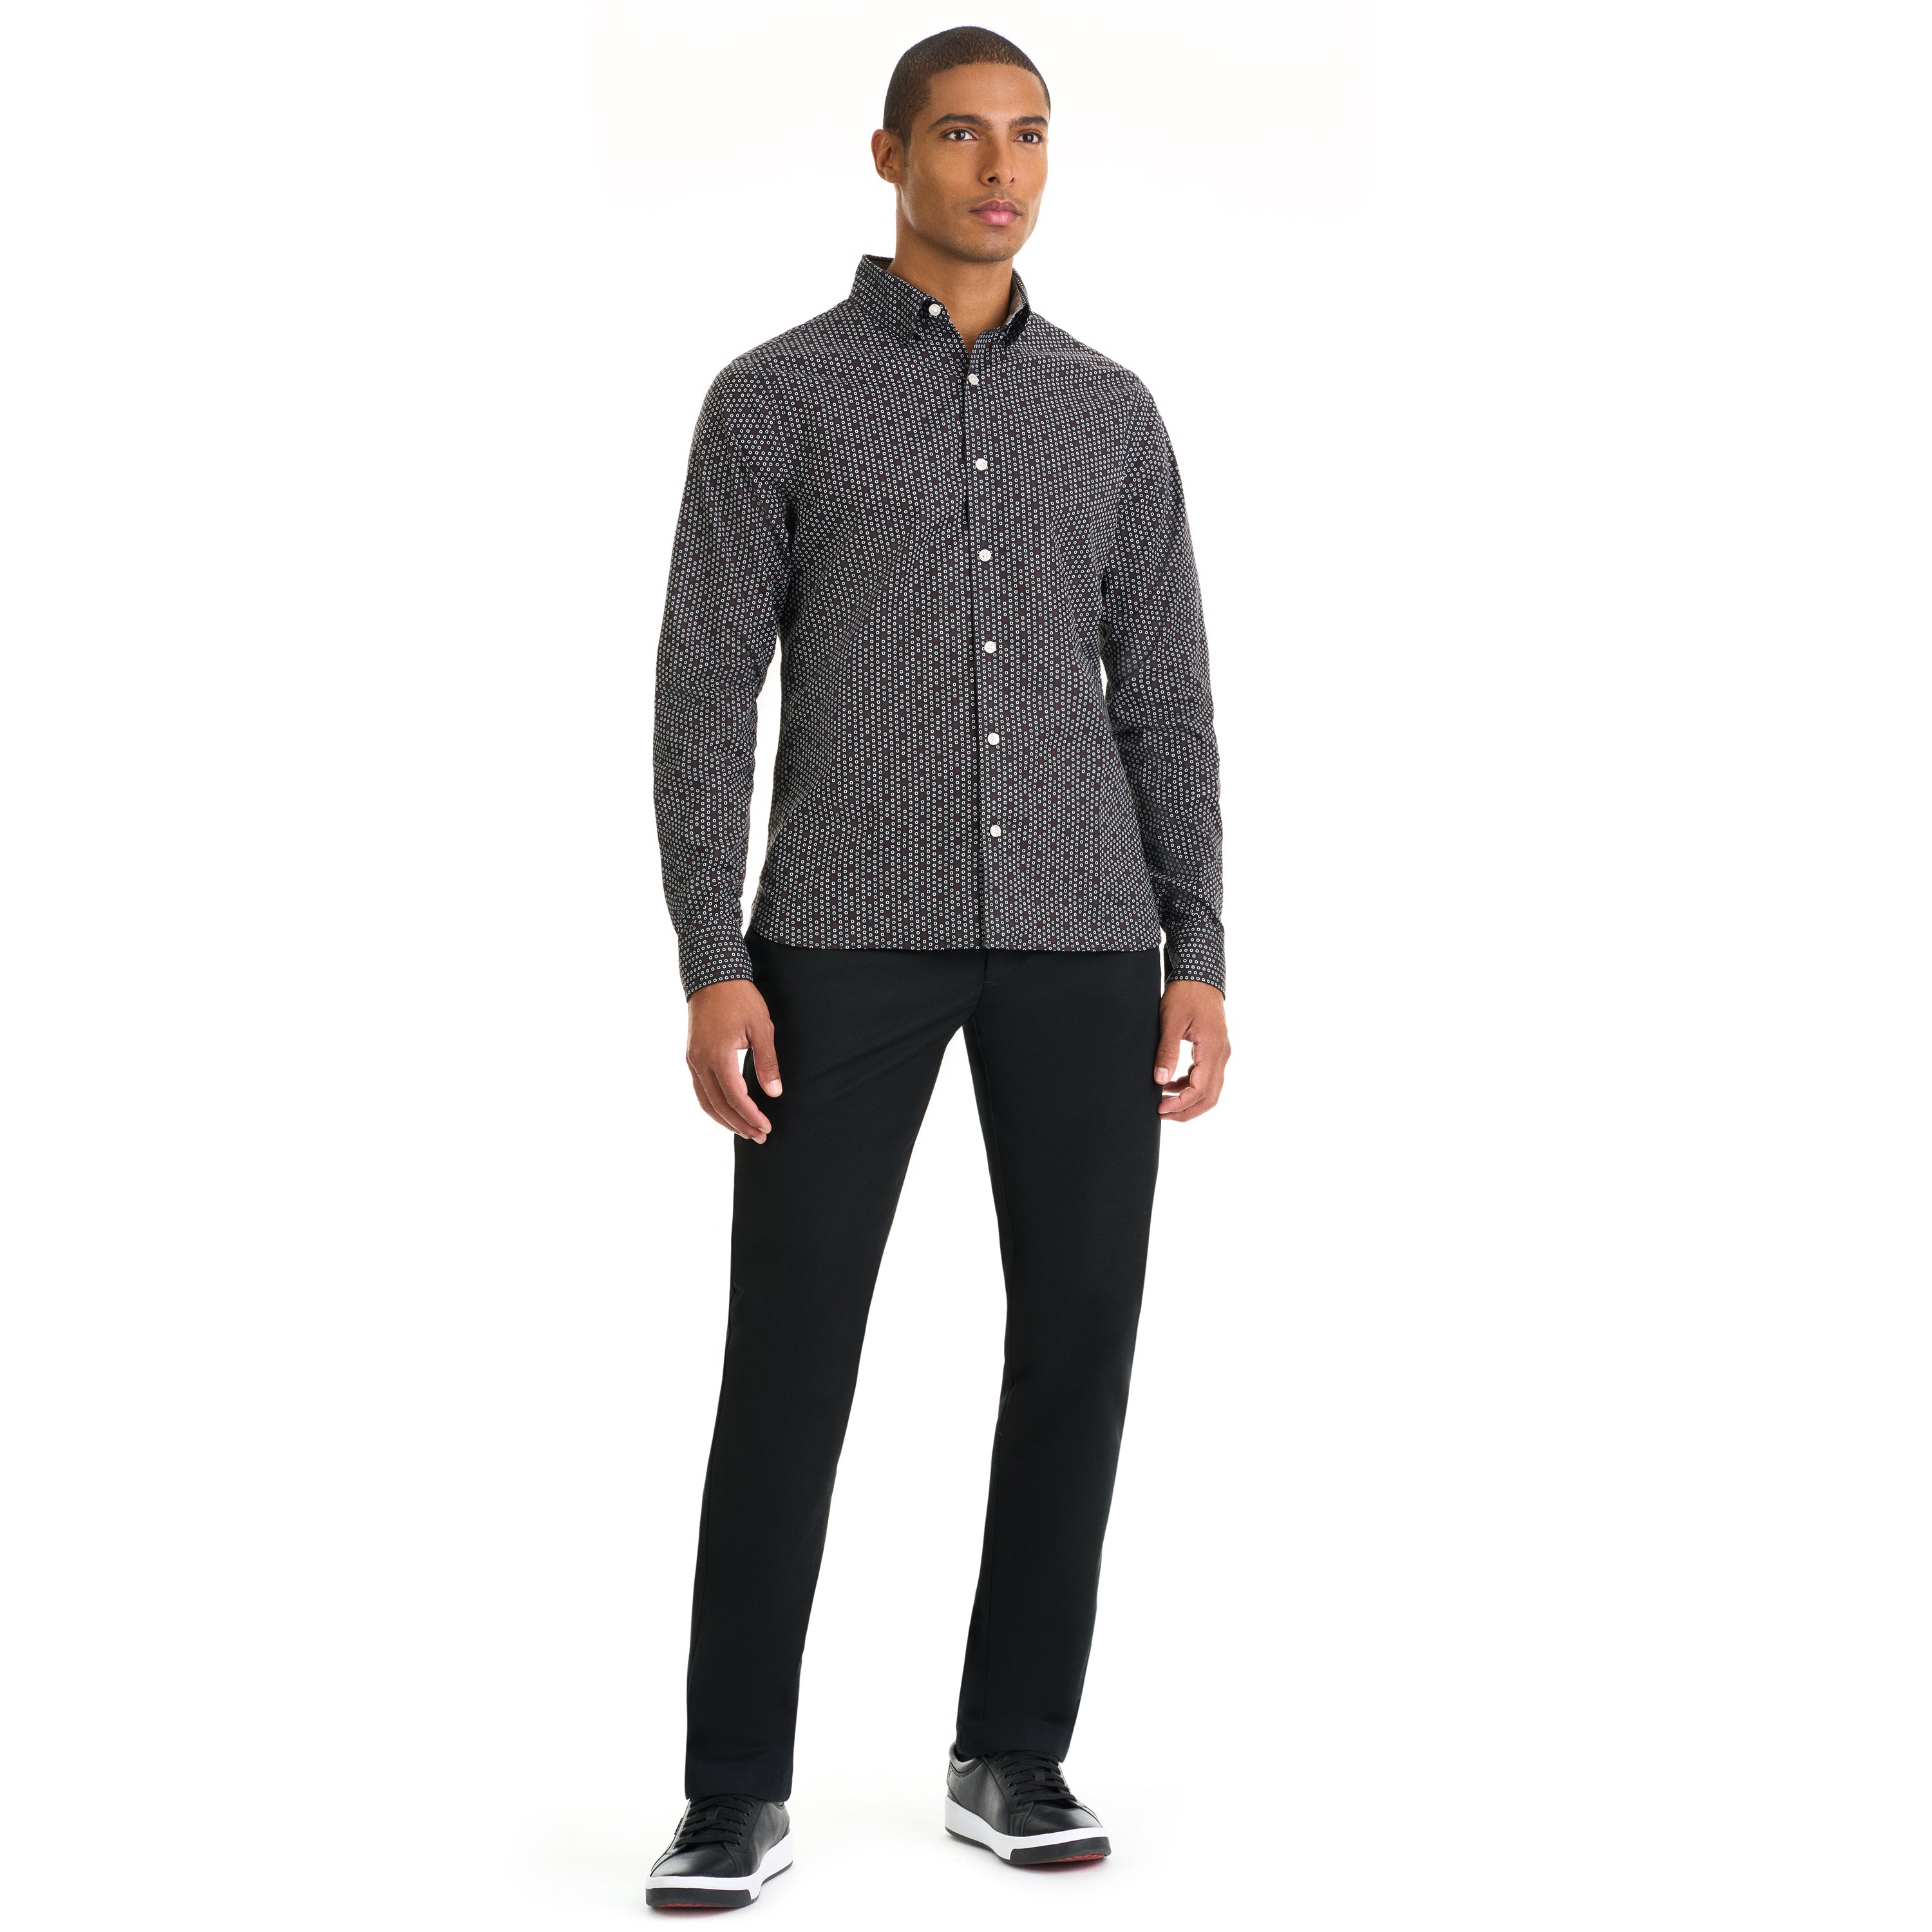 Essential Stain Shield Shirt Long Sleeve Wovens Drop Geo Print - Slim Fit